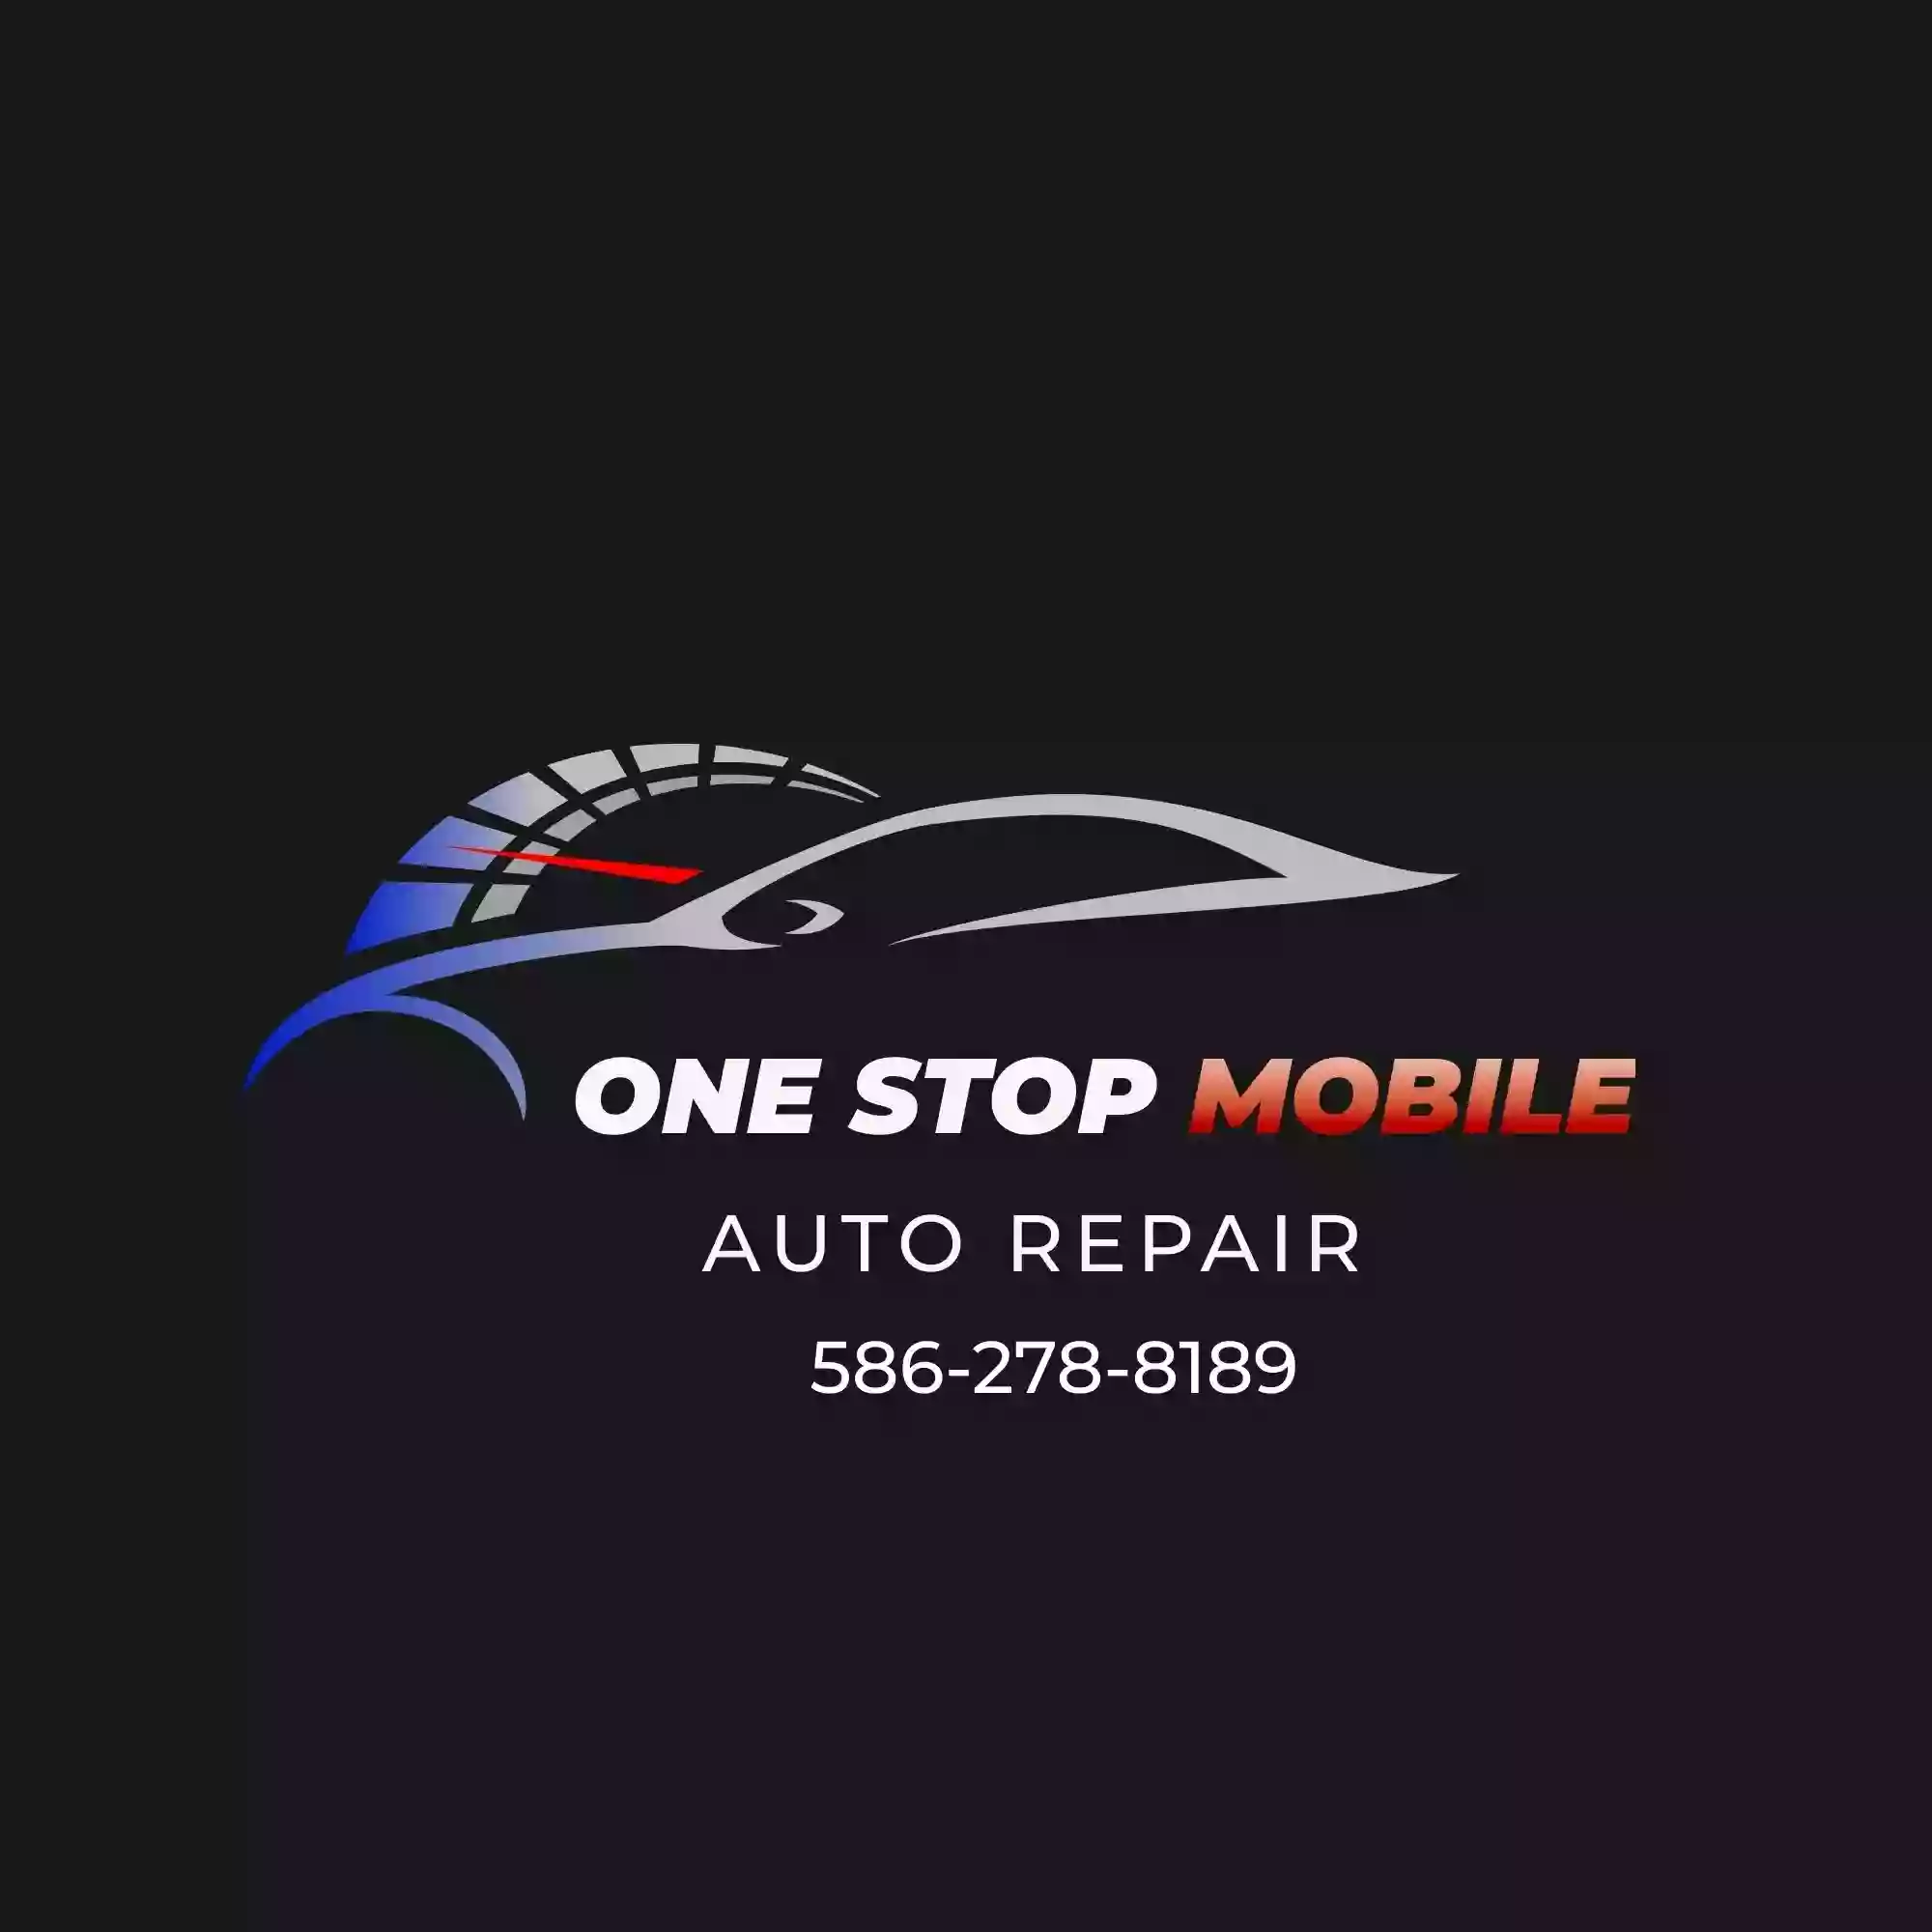 One Stop Mobile Auto Repair